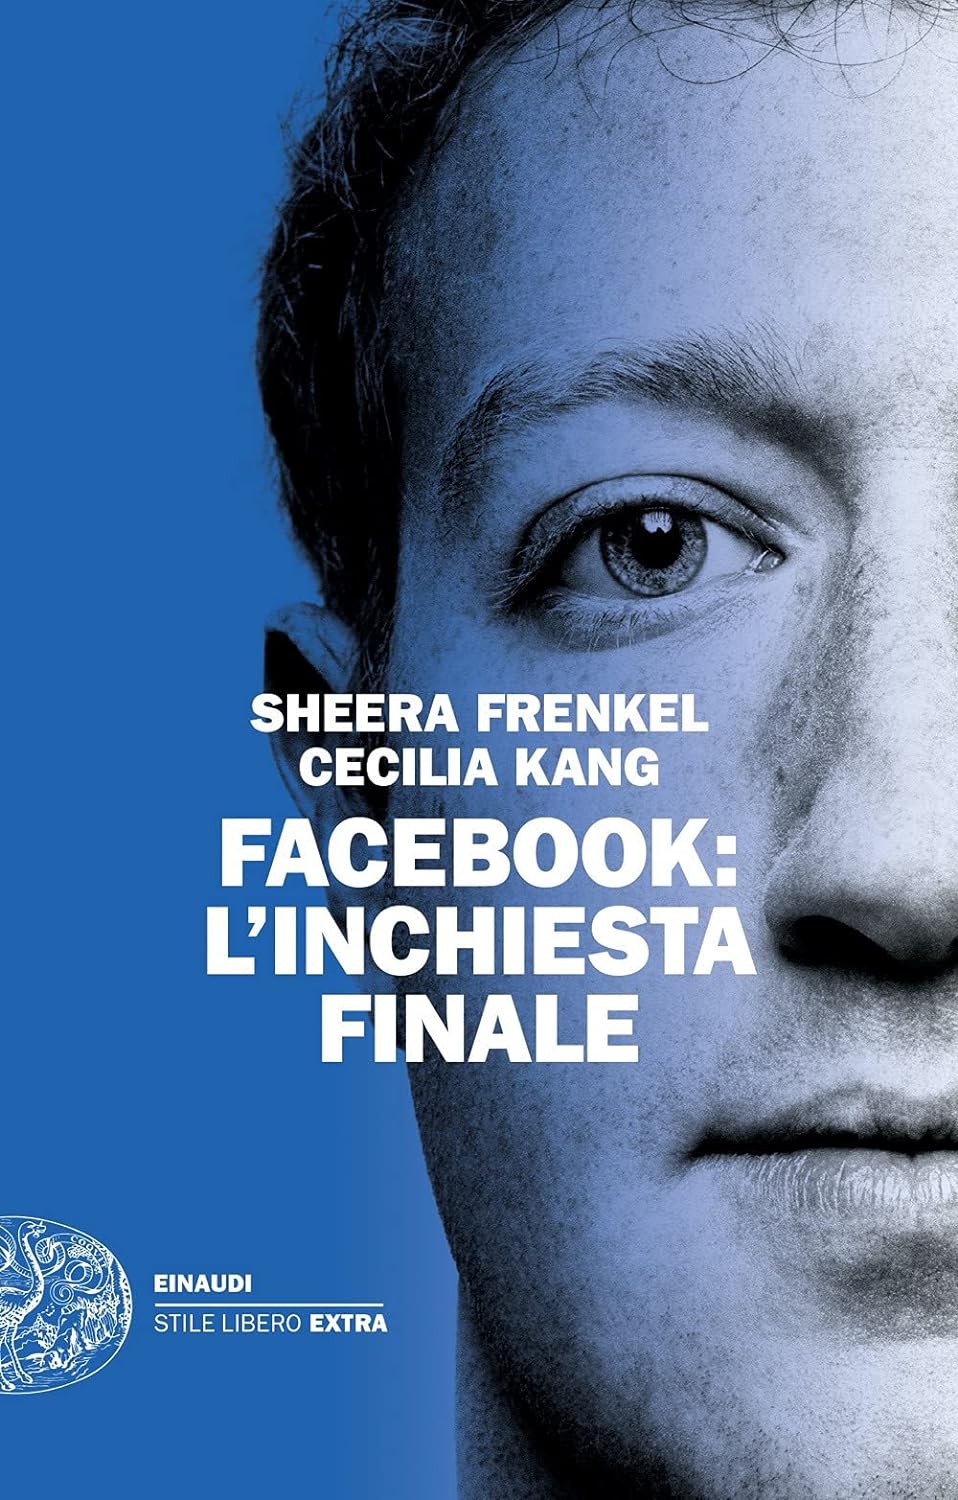 Sheera Frenkel, Cecilia Kang: Facebook: l'inchiesta finale (Italiano language, Einaudi)